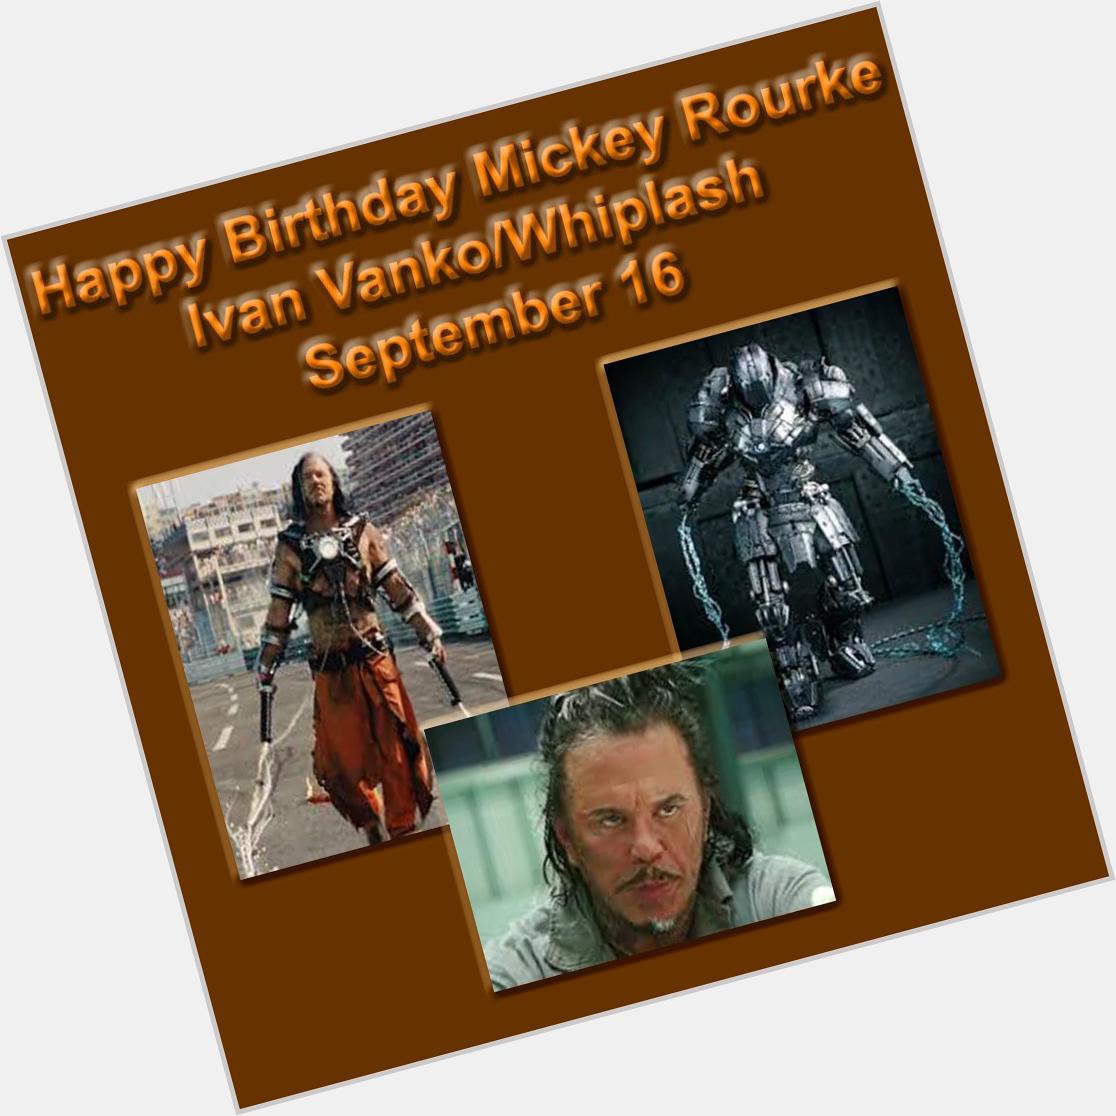 Happy Birthday to Mickey Rourke, who starred as Ivan Vanko/Whiplash in Iron Man 2.  